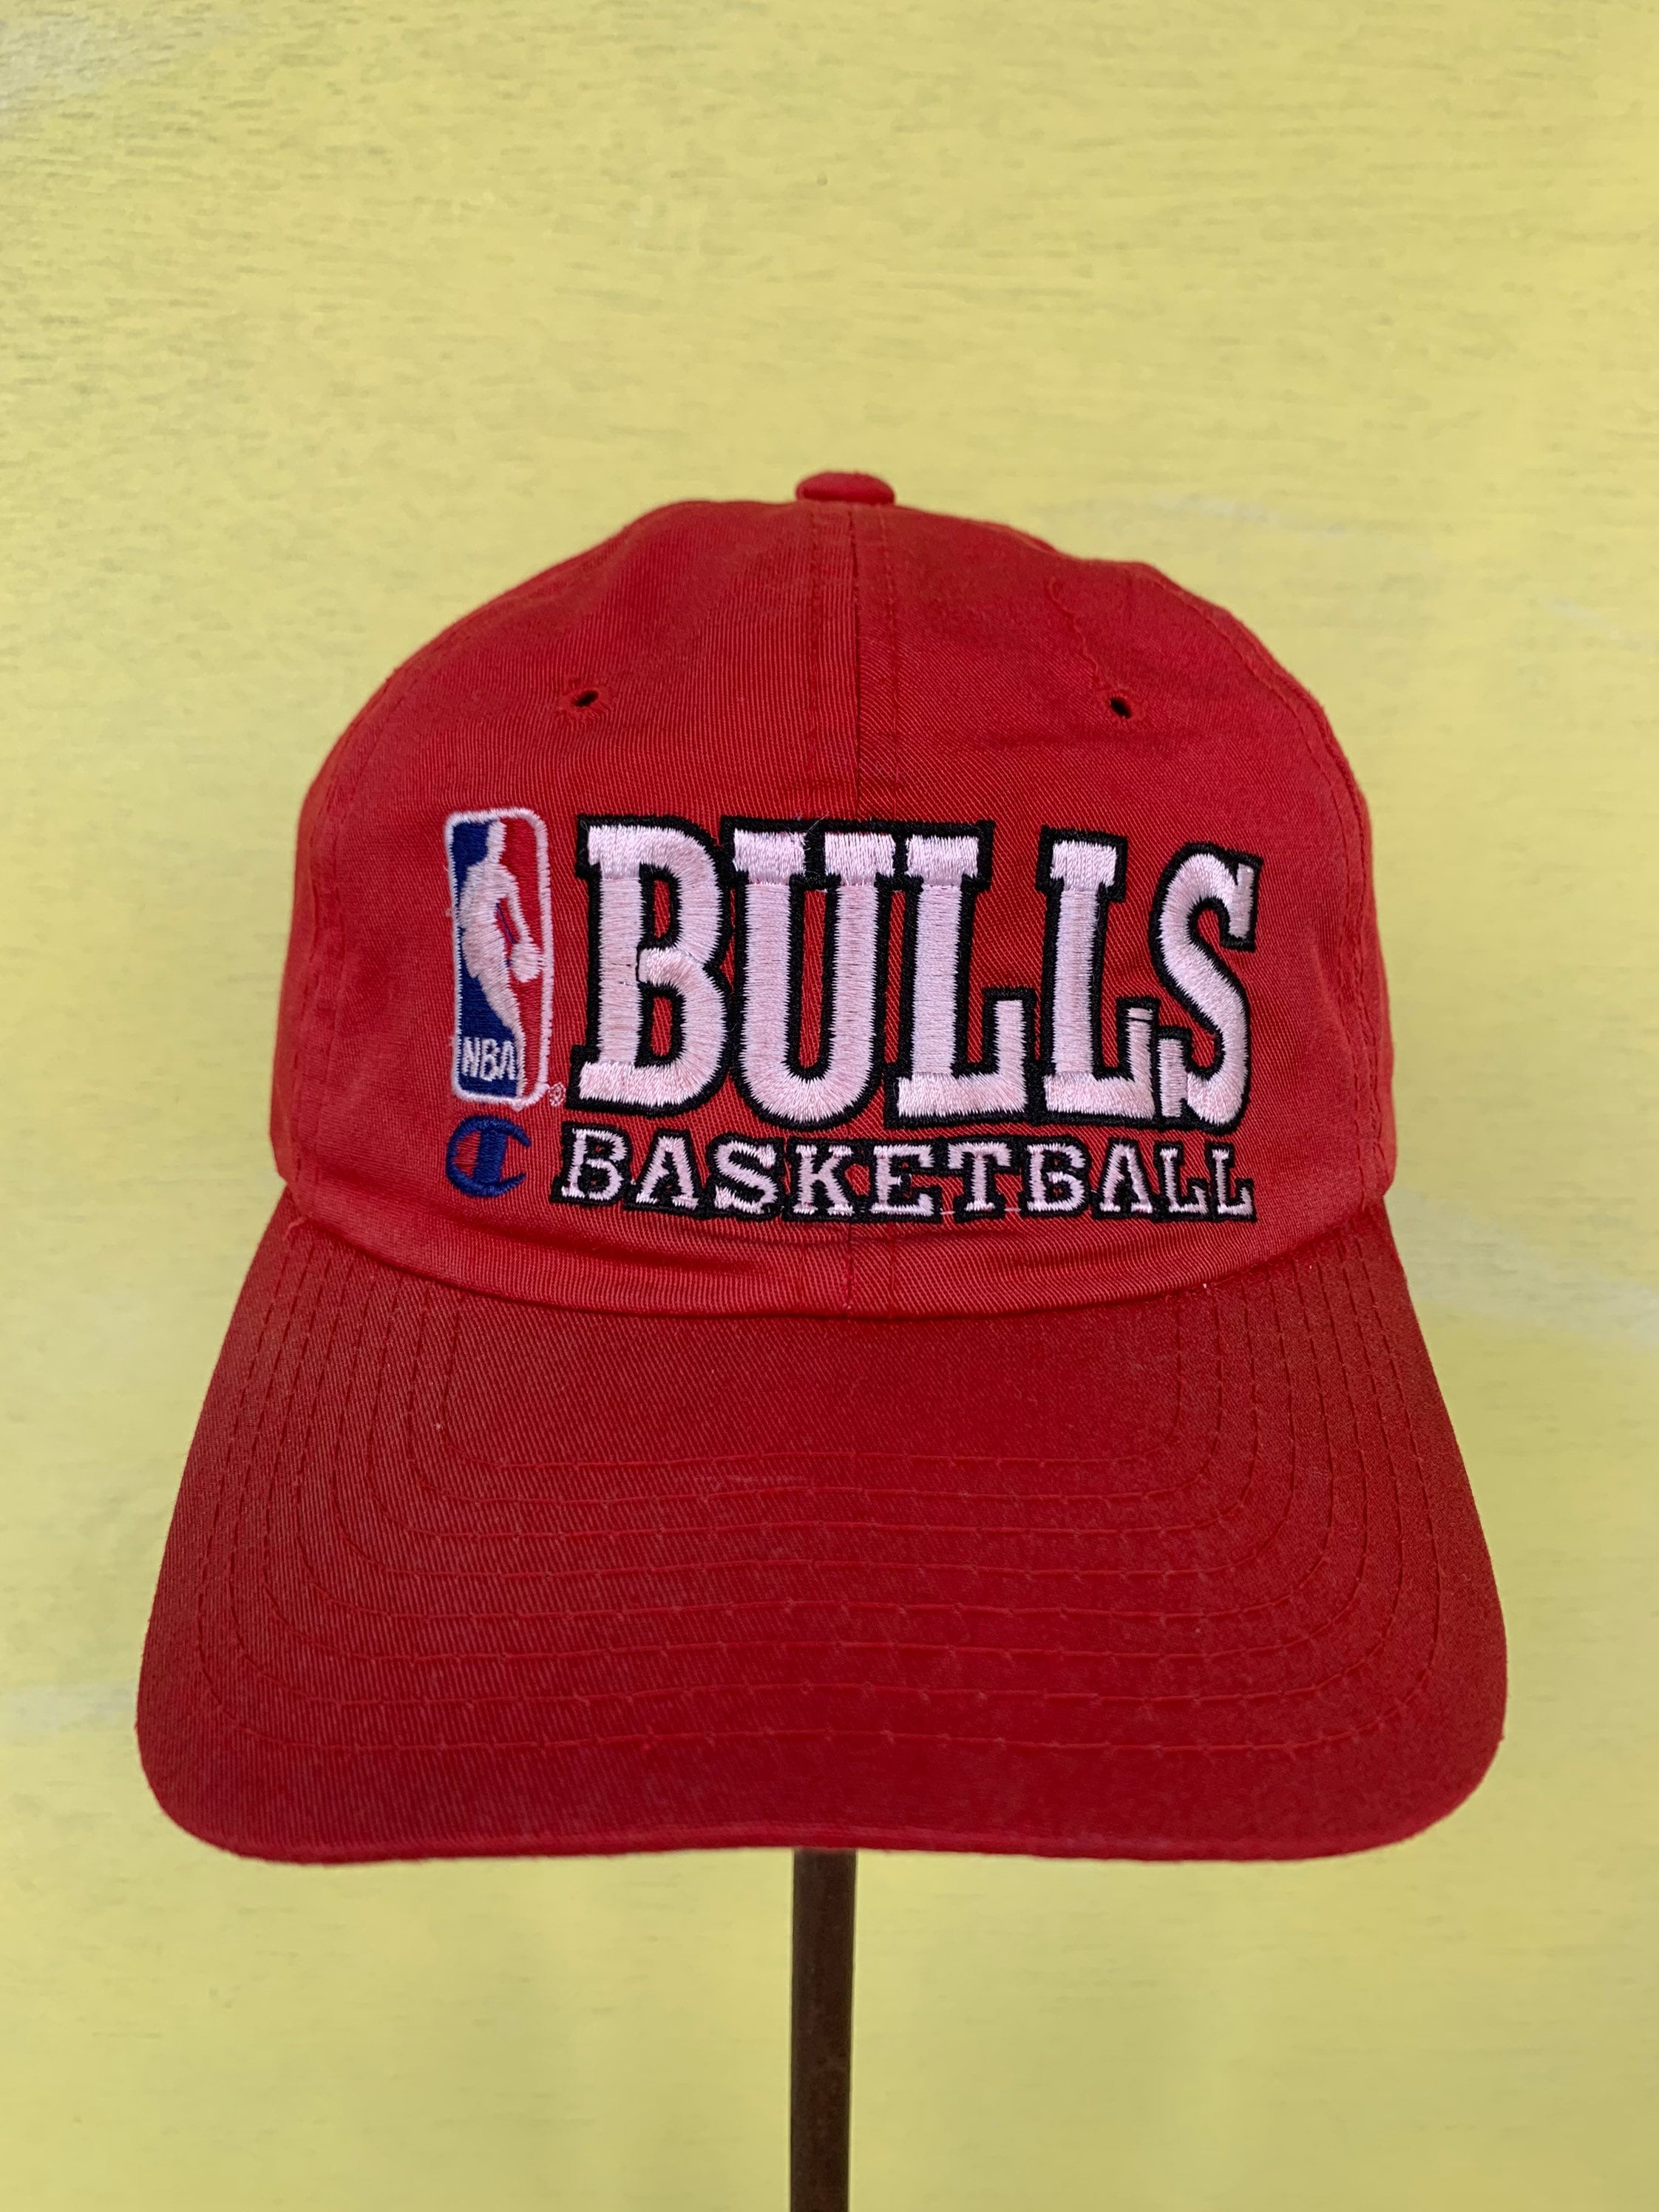 Pin by doesitevenmatter on champions  Chicago bulls, Nba chicago bulls,  Snapback hats